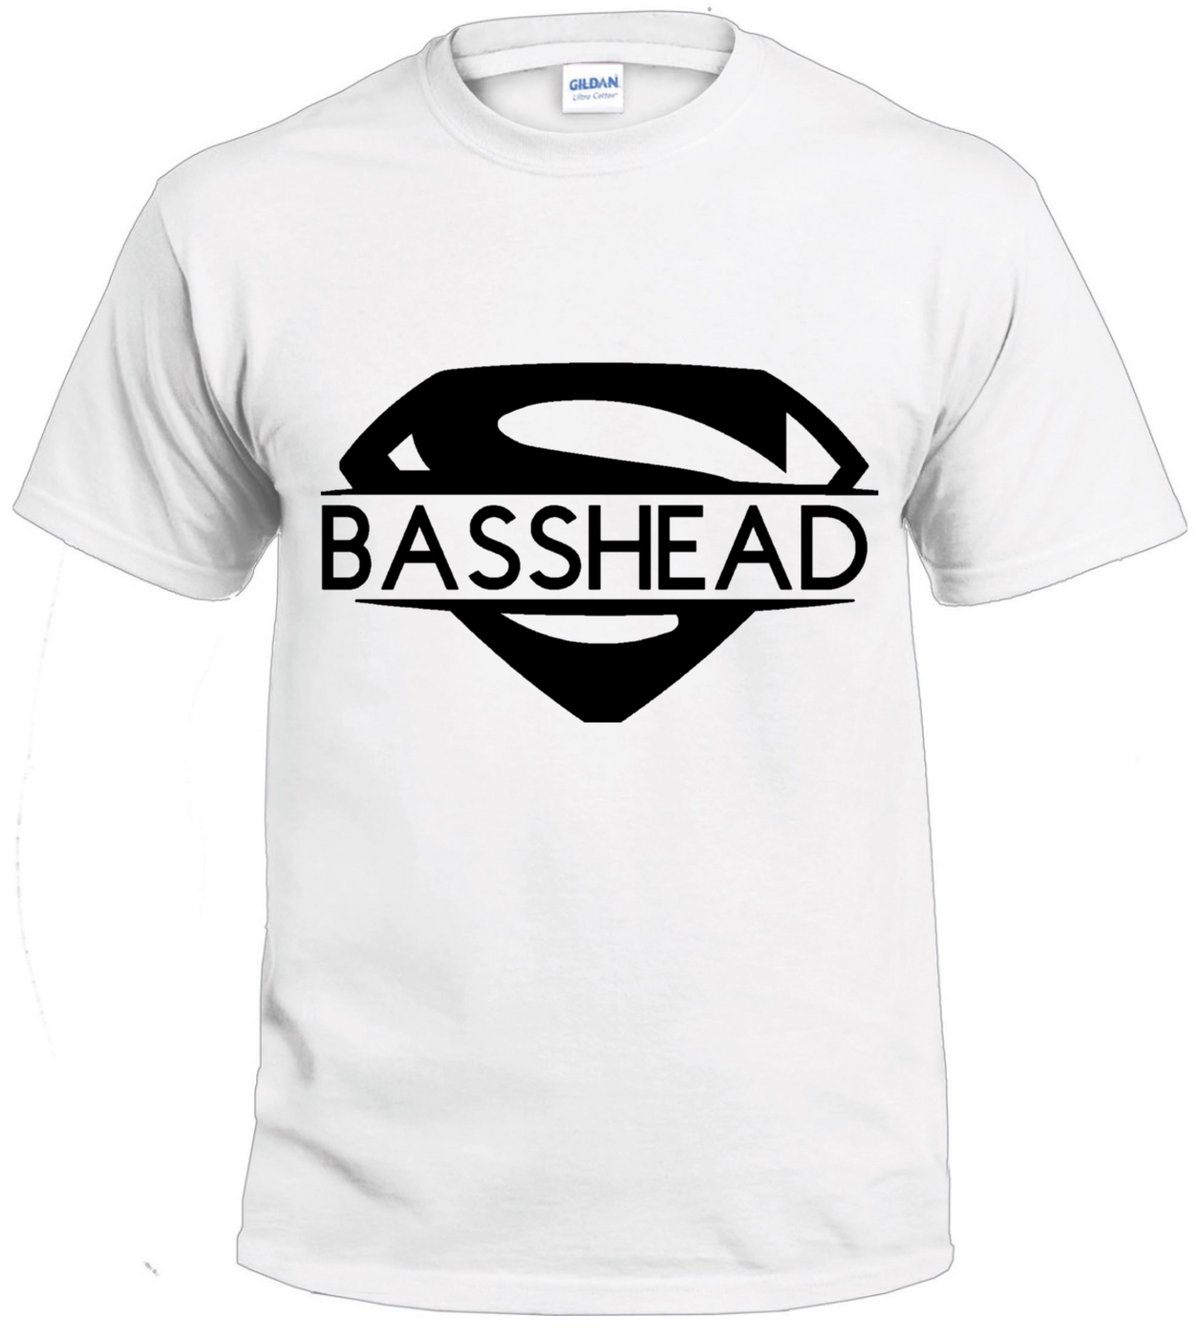 Super Basshead t-shirt